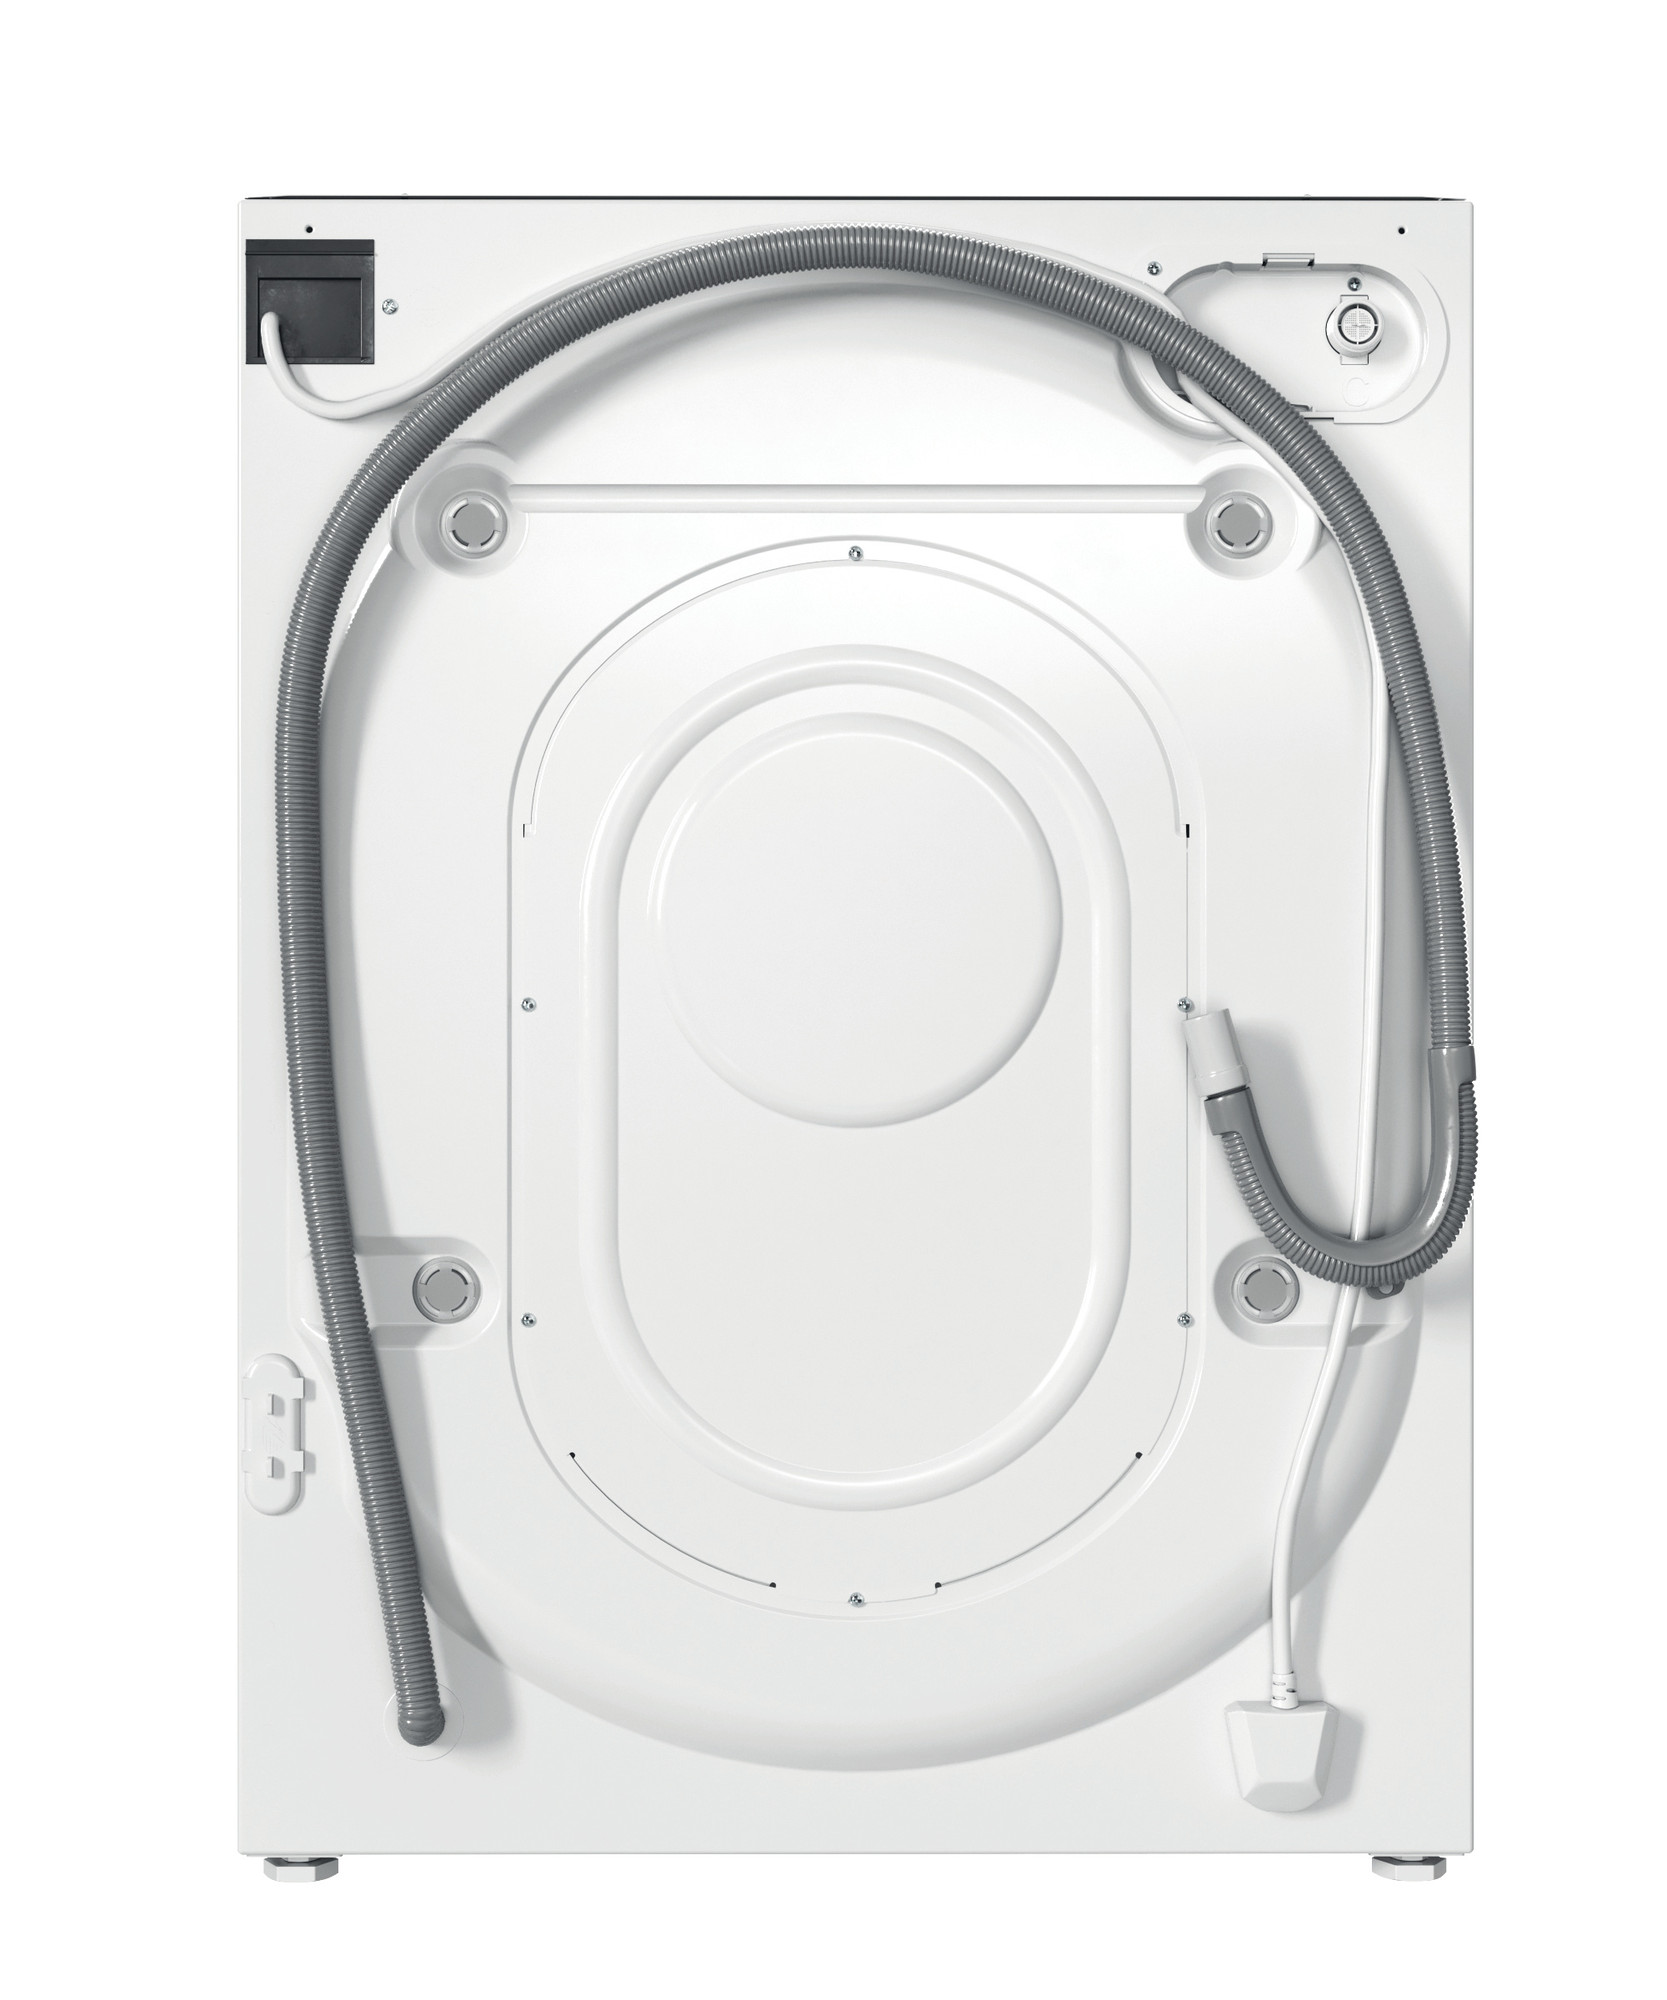 Picture of Indesit Built in front loading washing machine: 7,0kg - BI WMIL 71252 UK N White